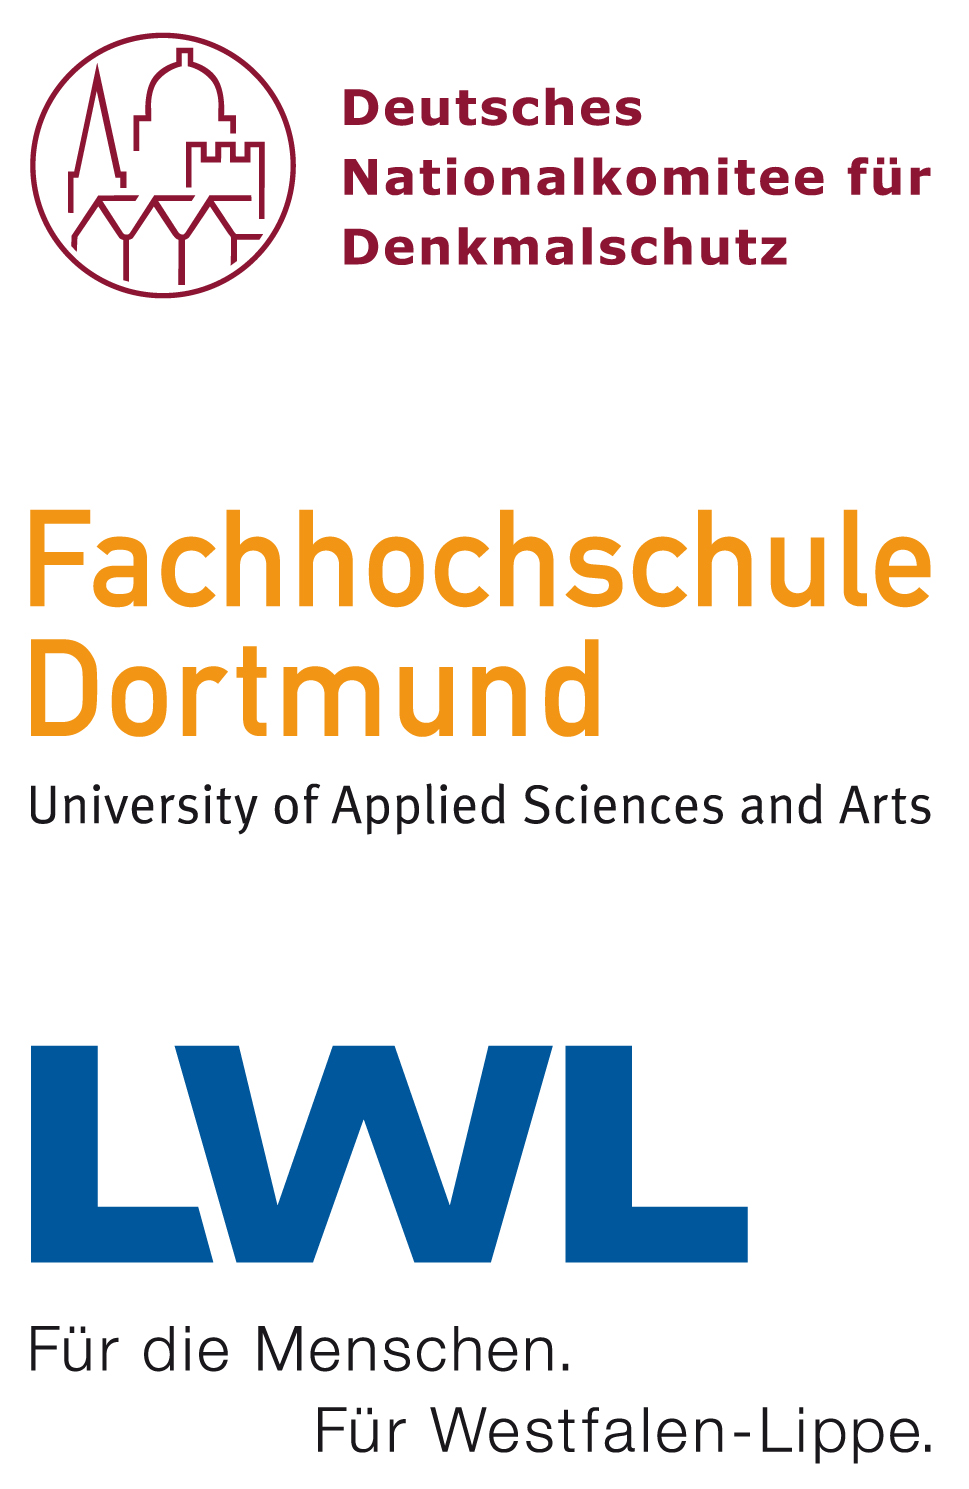 tl_files/standard/bilder/Aktivitaeten/DNK/Lutherkirche/logos.jpg